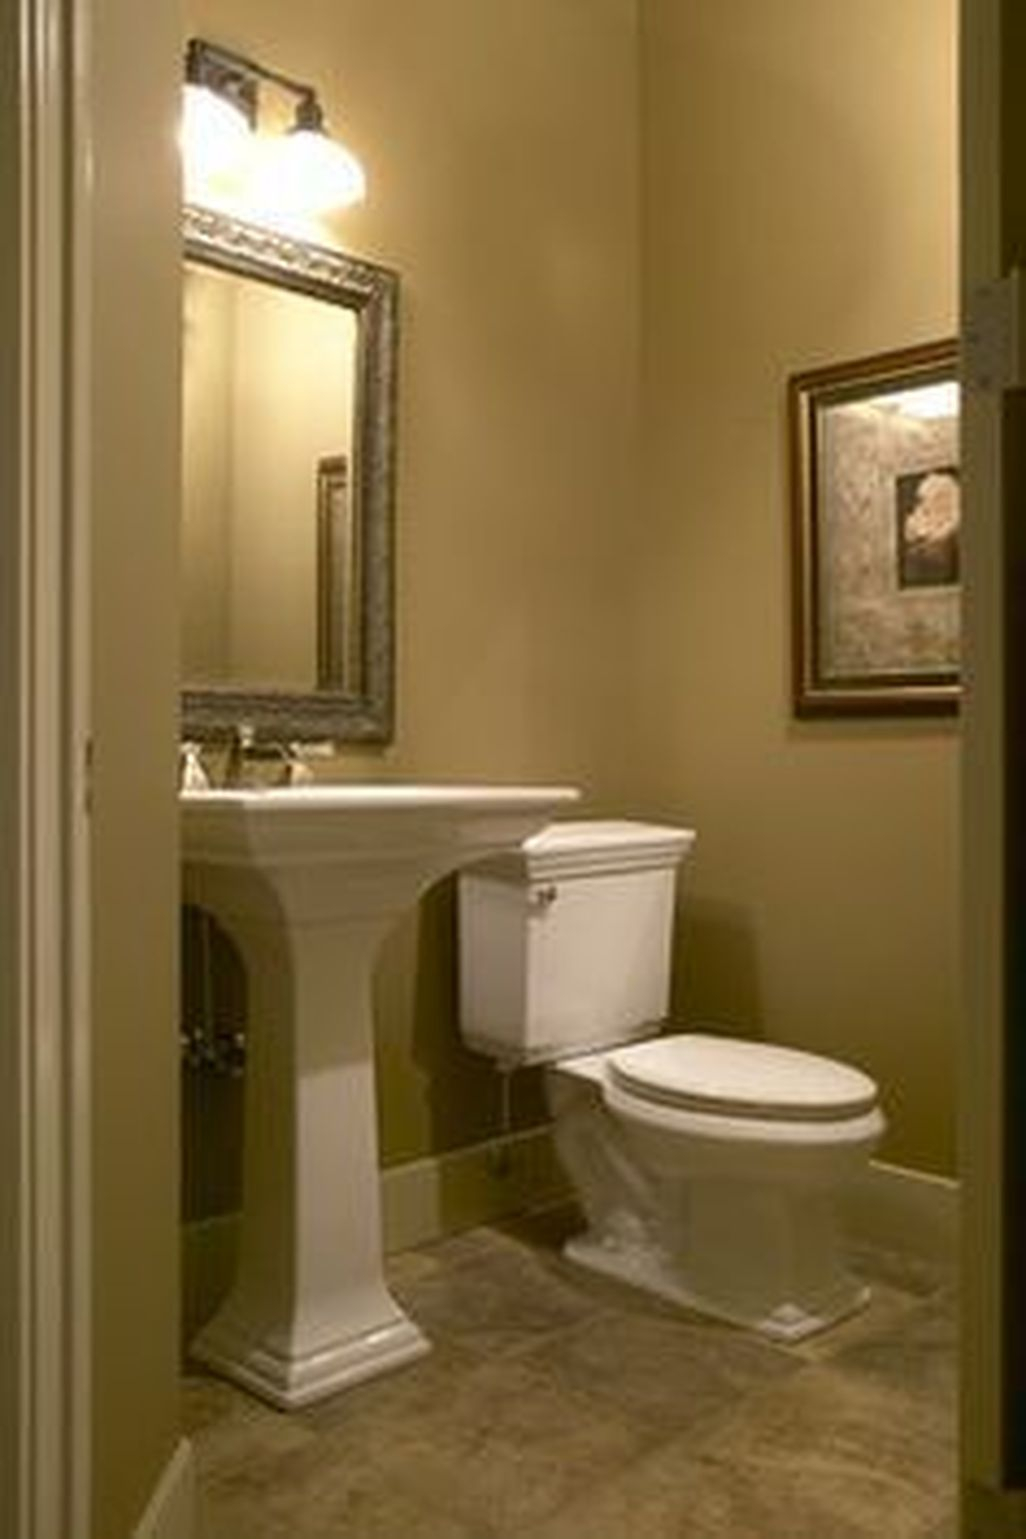 Awesome Country Mirror Bathroom Decor Ideas 40